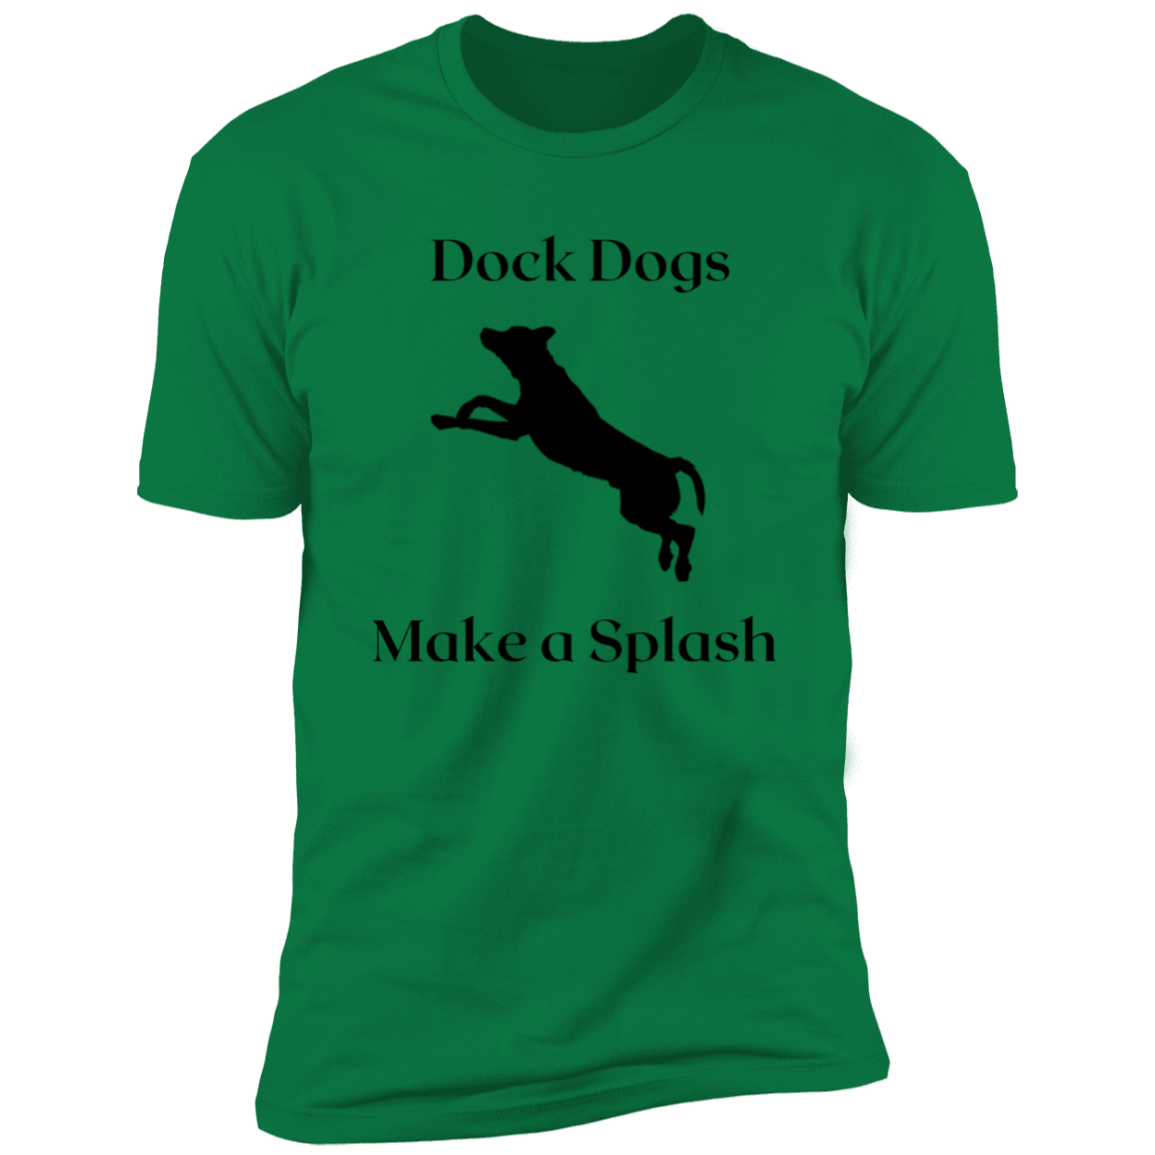 Dock Dogs Make a Splash Dock Diving t-shirt, Dock diving shirt, in kelly green